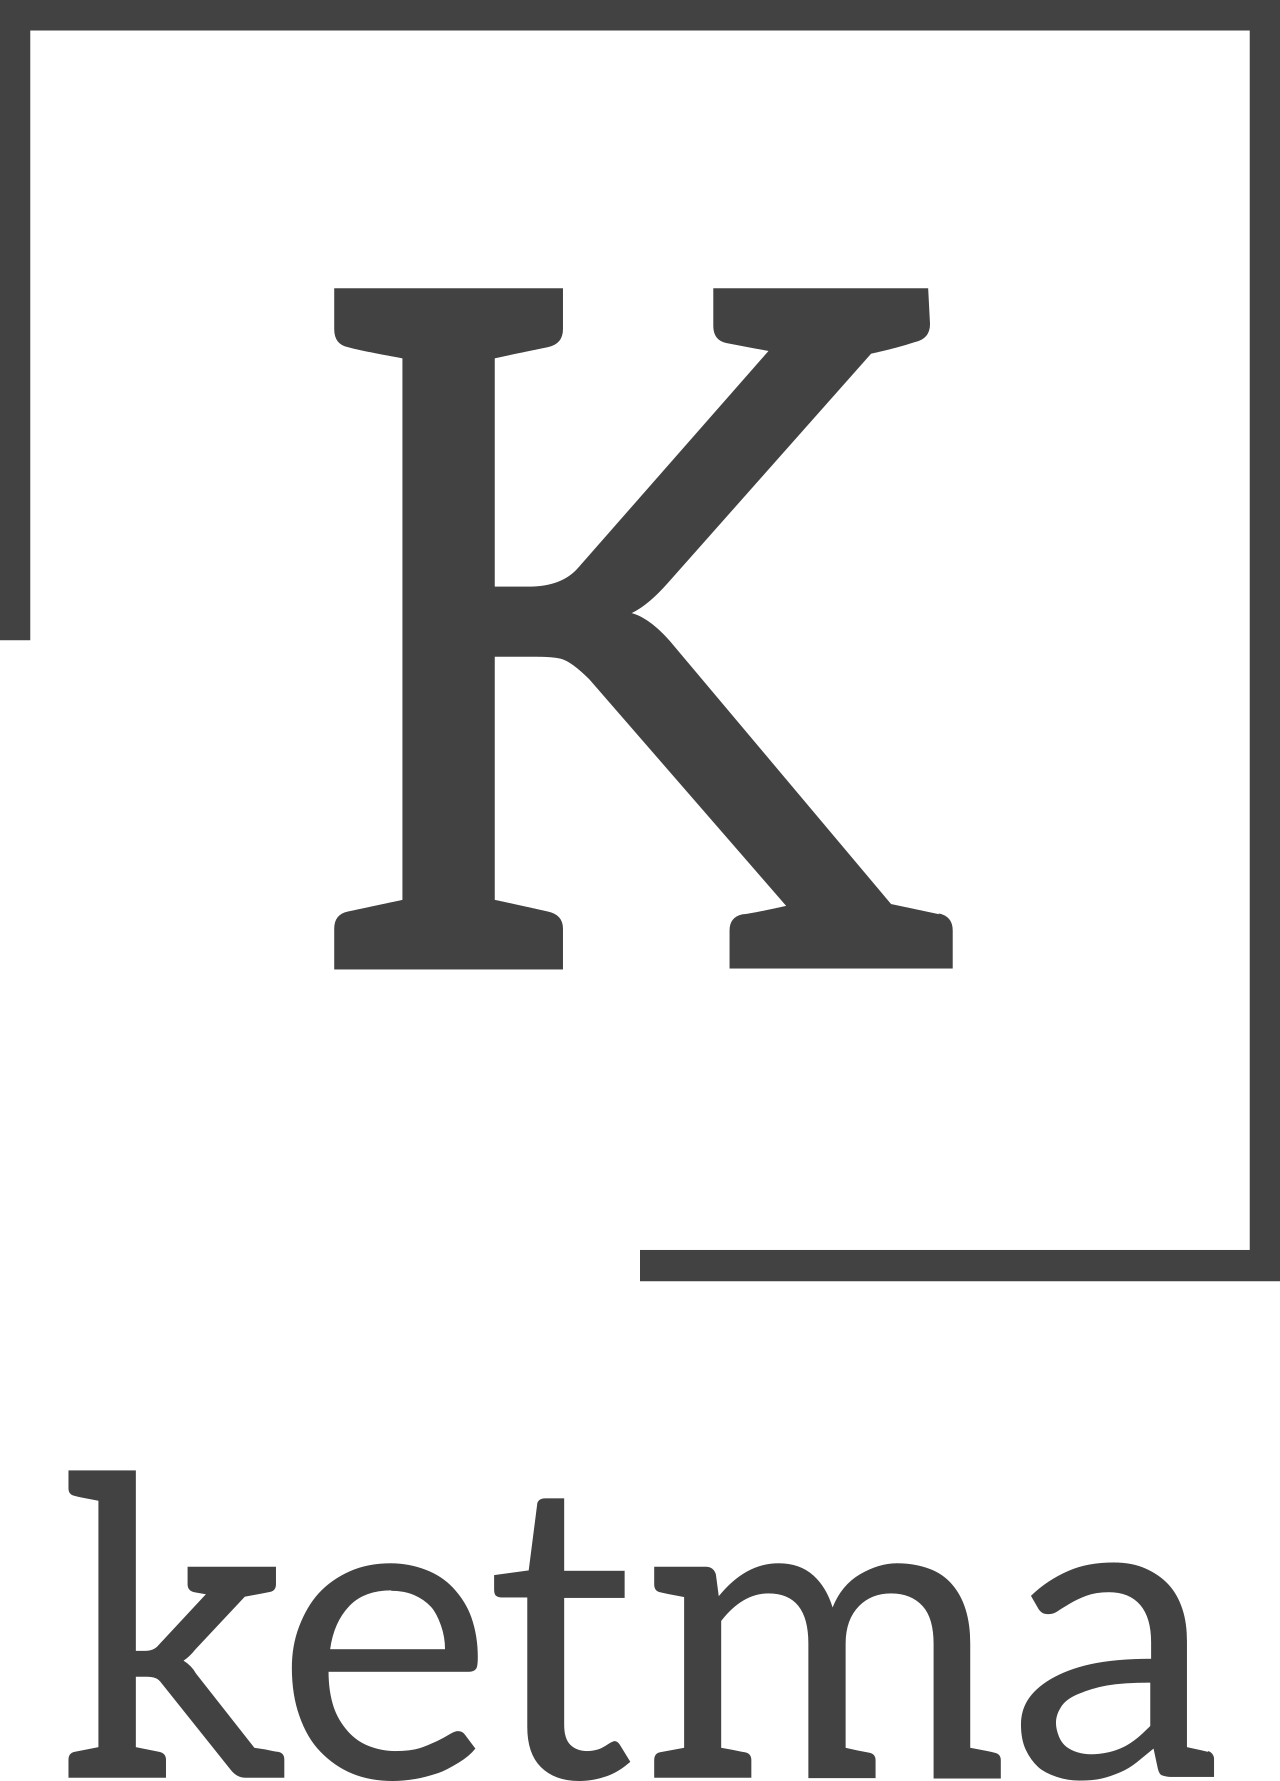 ketma's logo